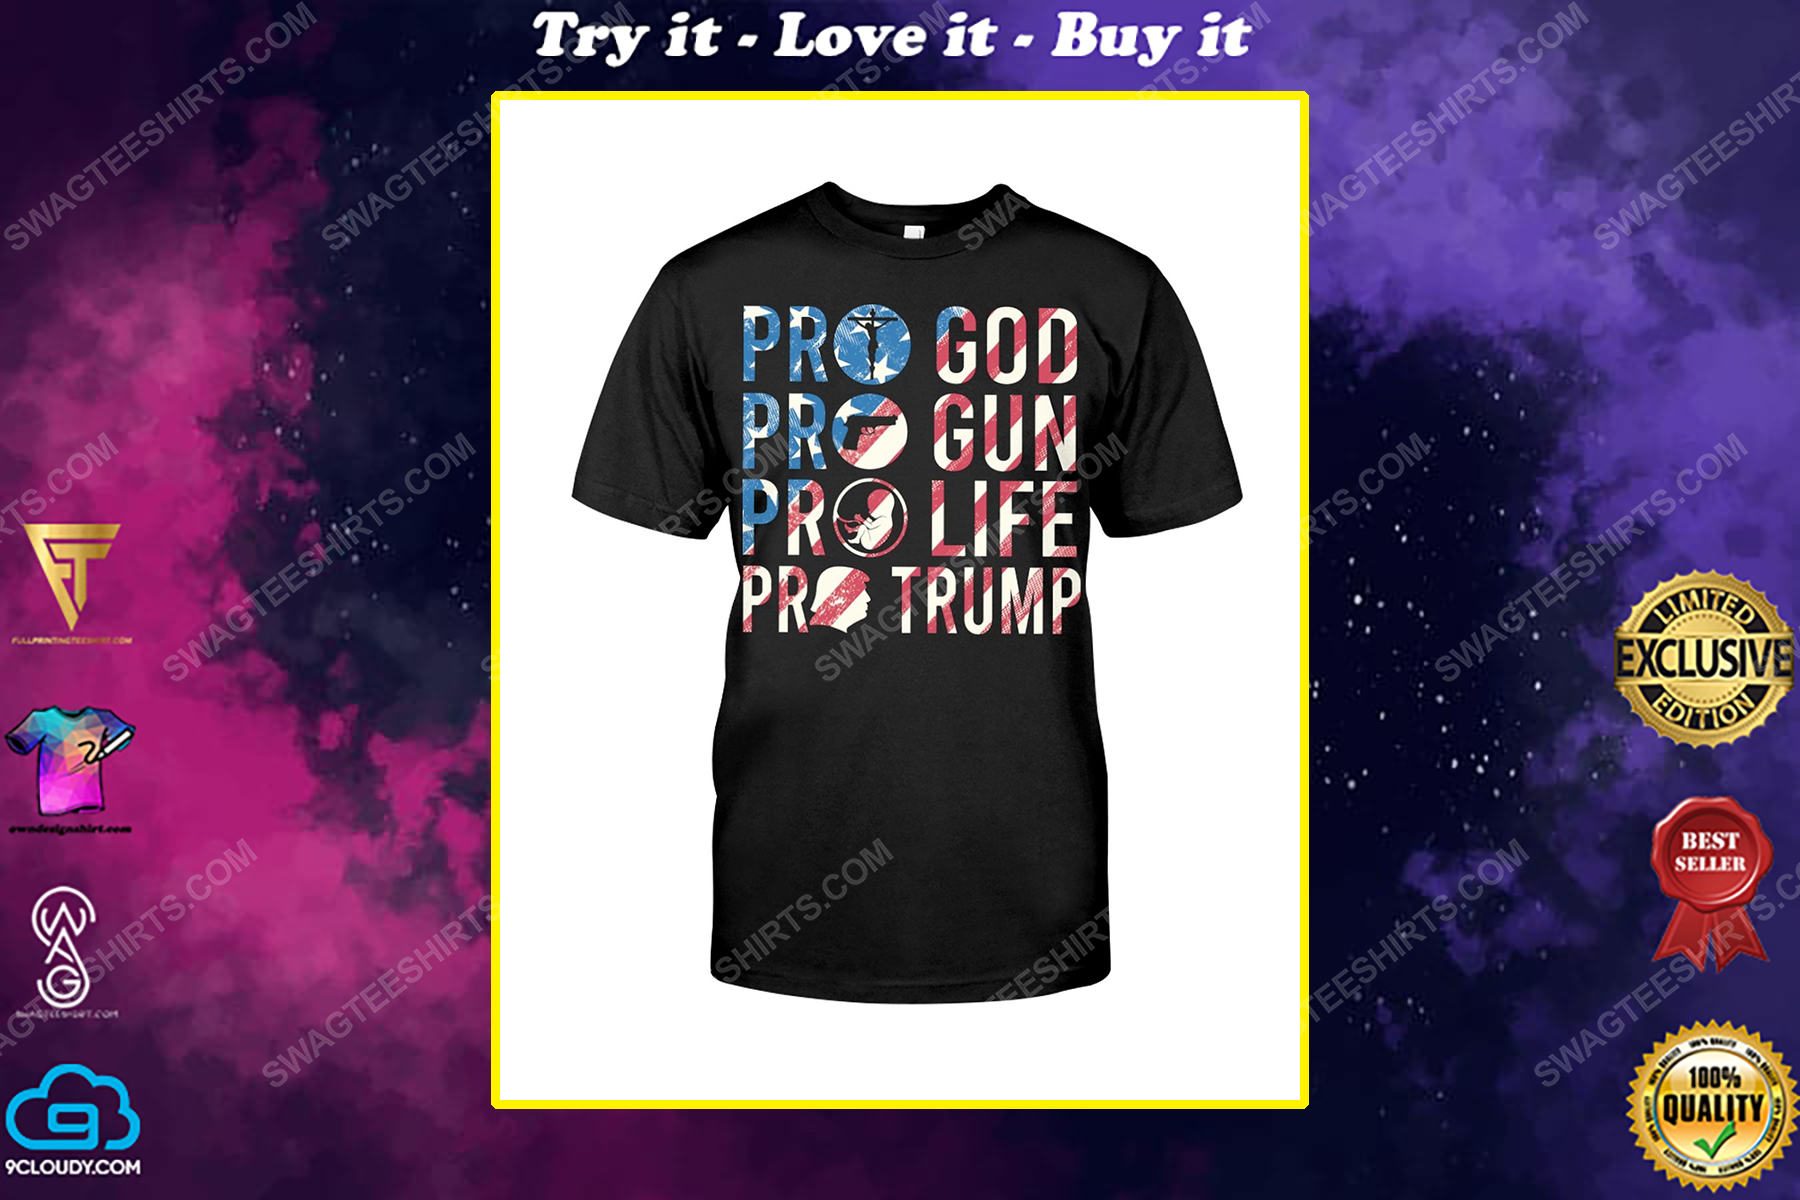 Pro God pro gun pro life pro trump political shirt